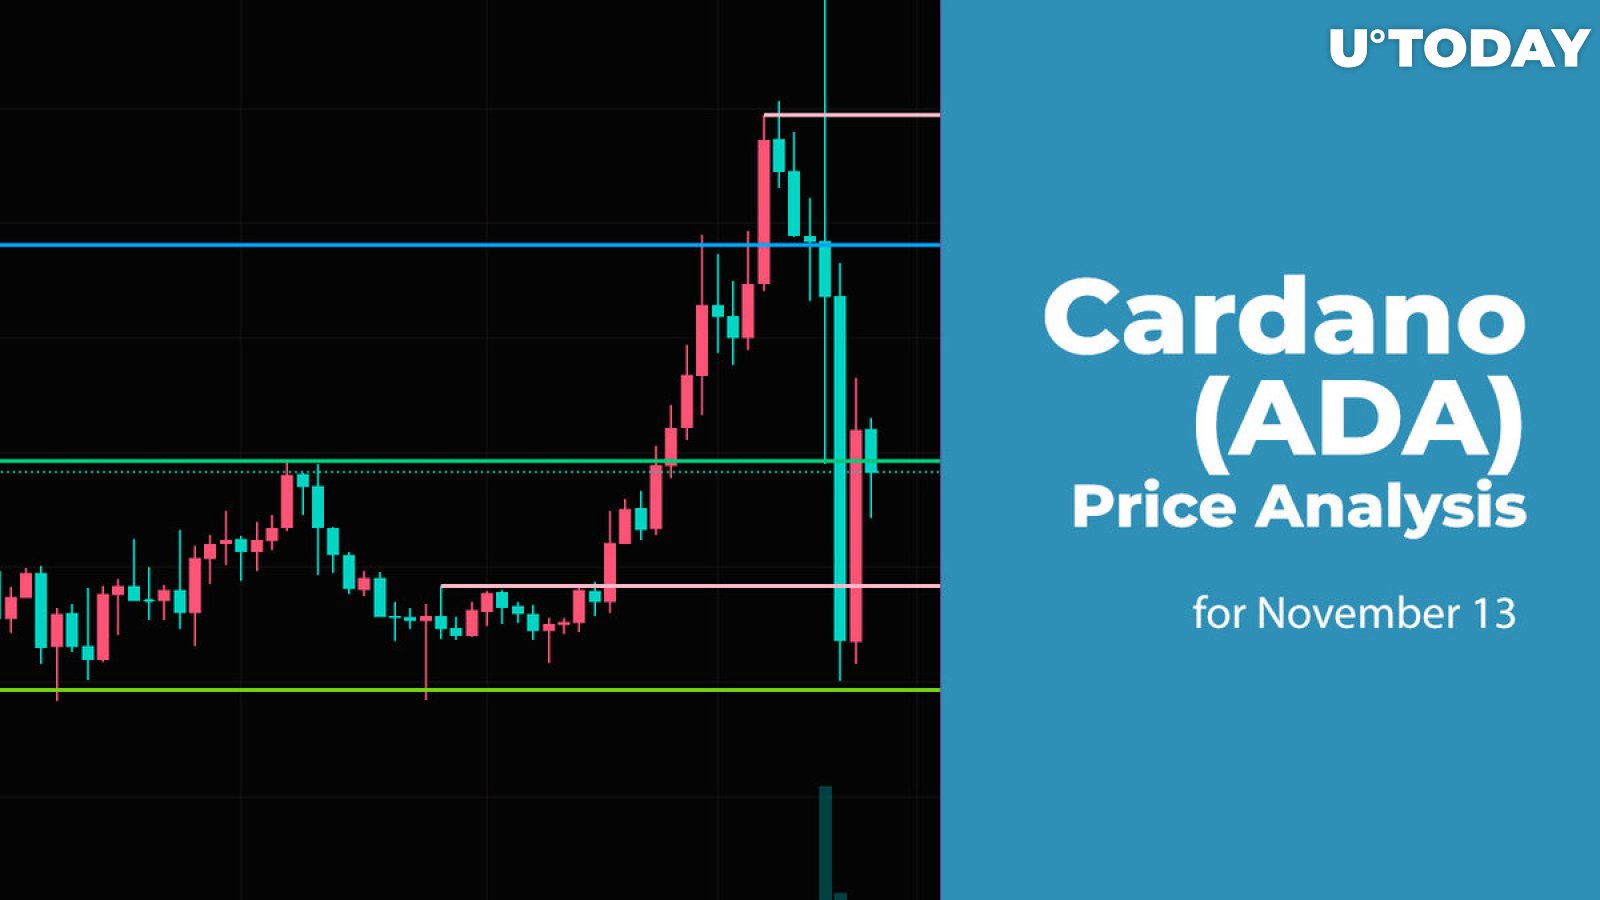 Cardano (ADA) Price Analysis for November 13